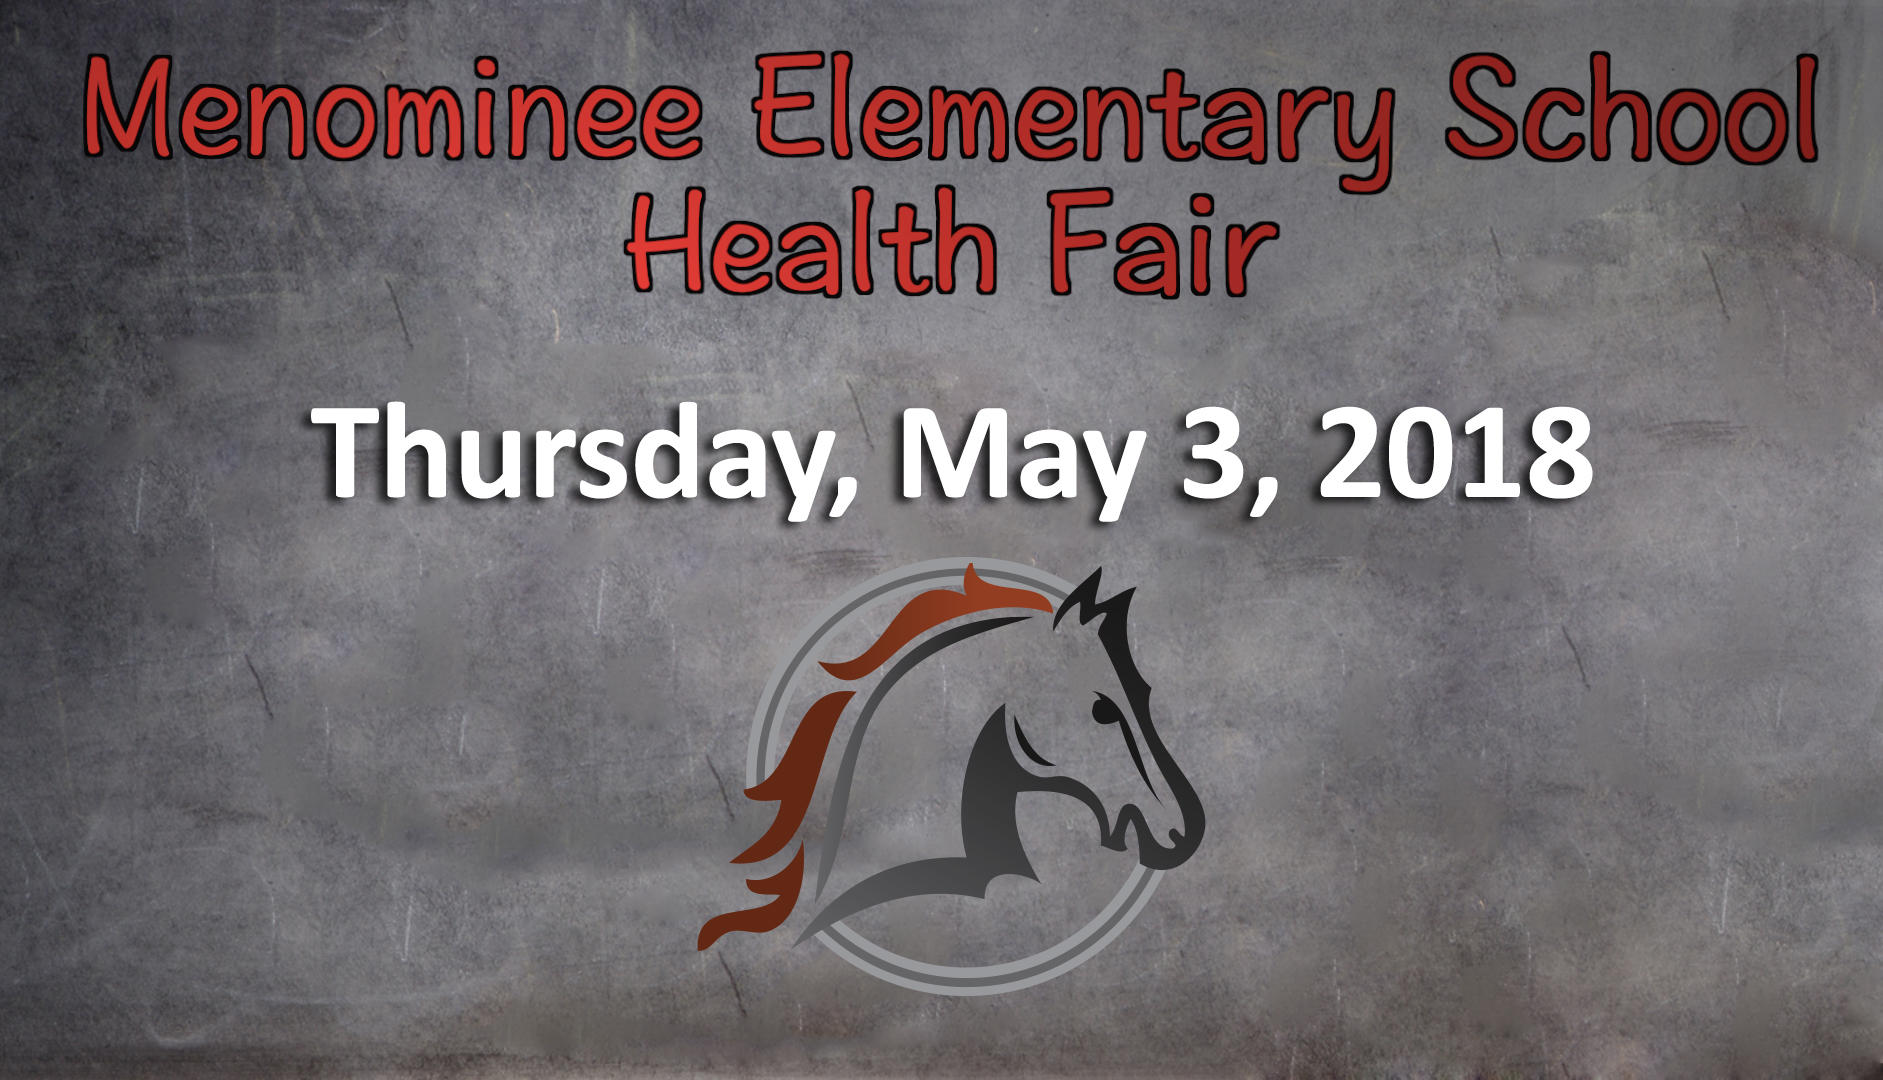 Menominee Elementary School Health Fair Thursday, May 3, 2018 with Menominee Mustang logo